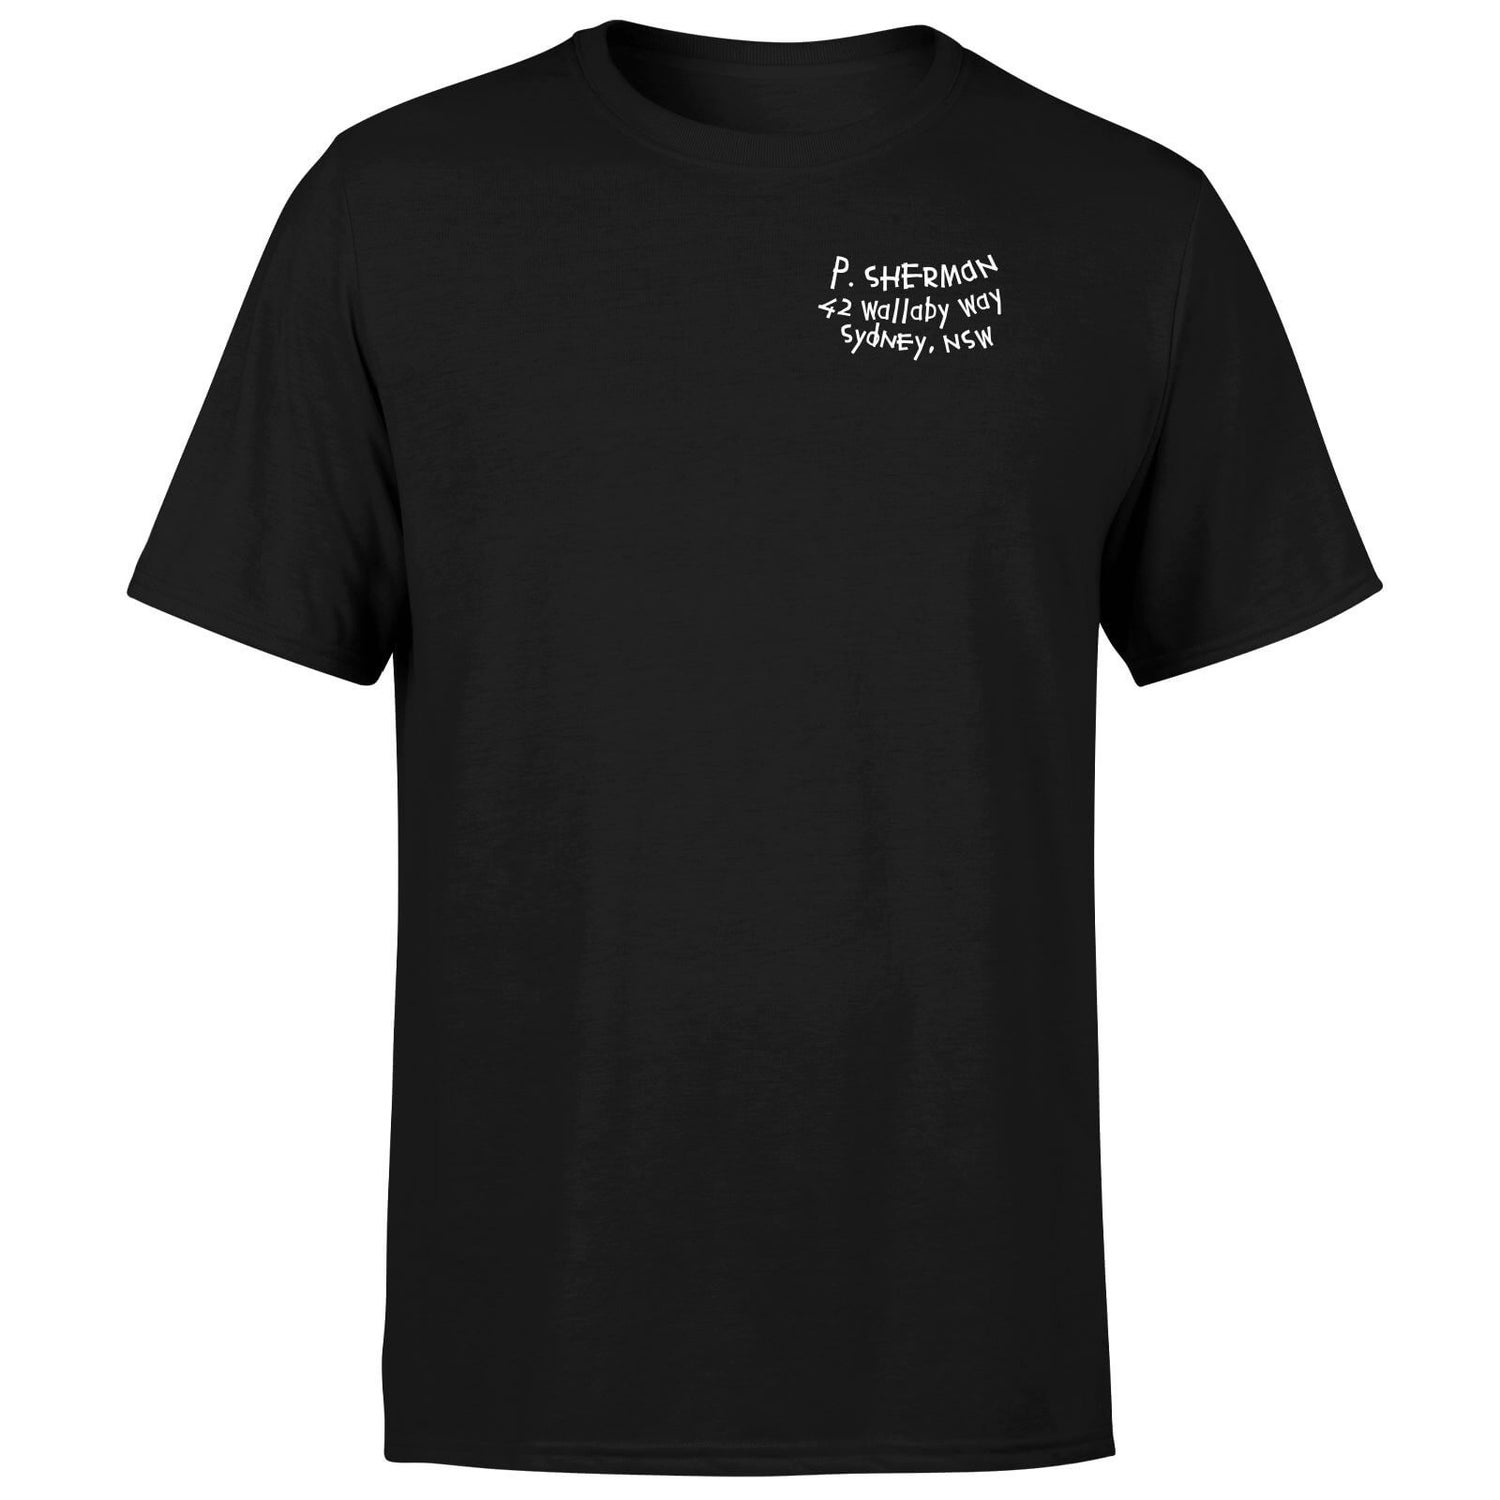 Finding Nemo P.Sherman Address Men's T-Shirt - Black